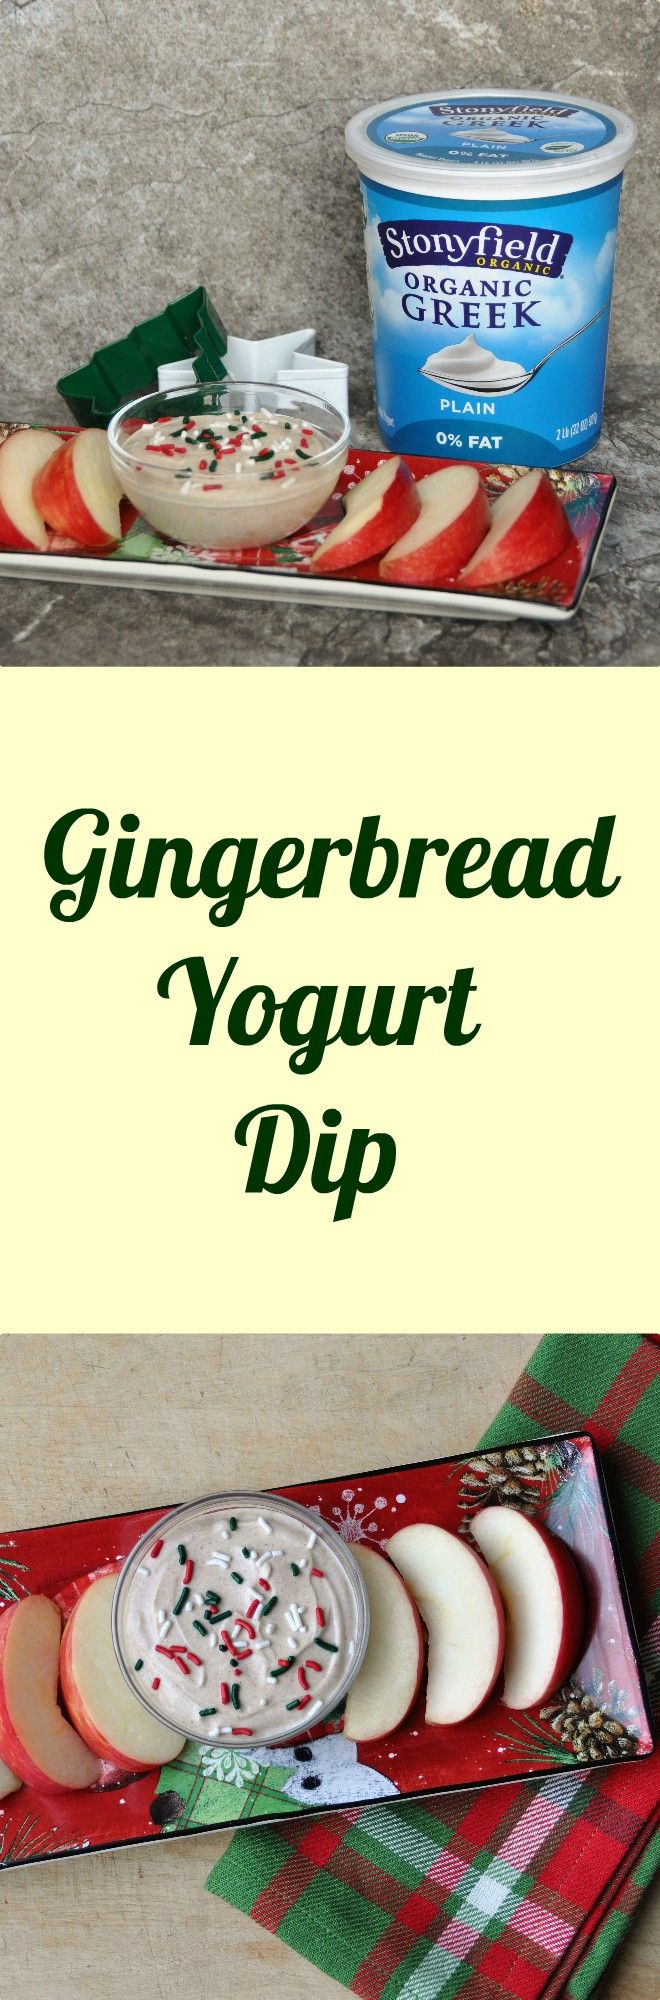 Gingerbread Yogurt Dip Pinterest Image